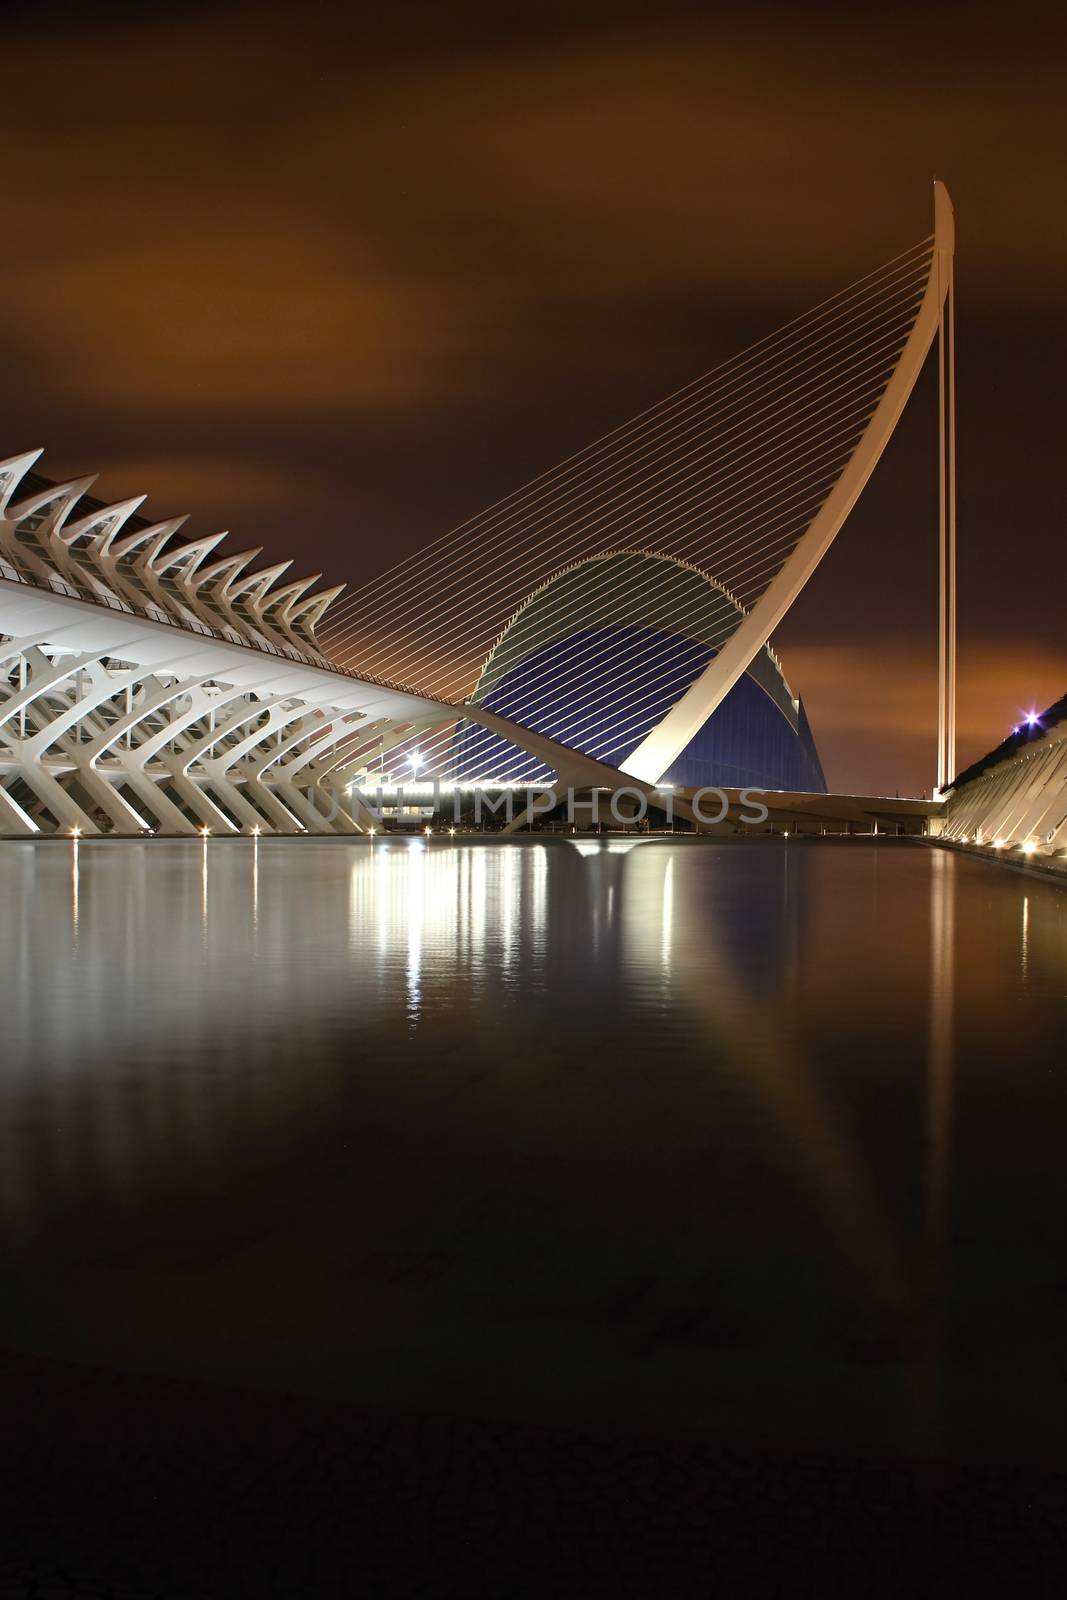 Valencia at night by Dermot68